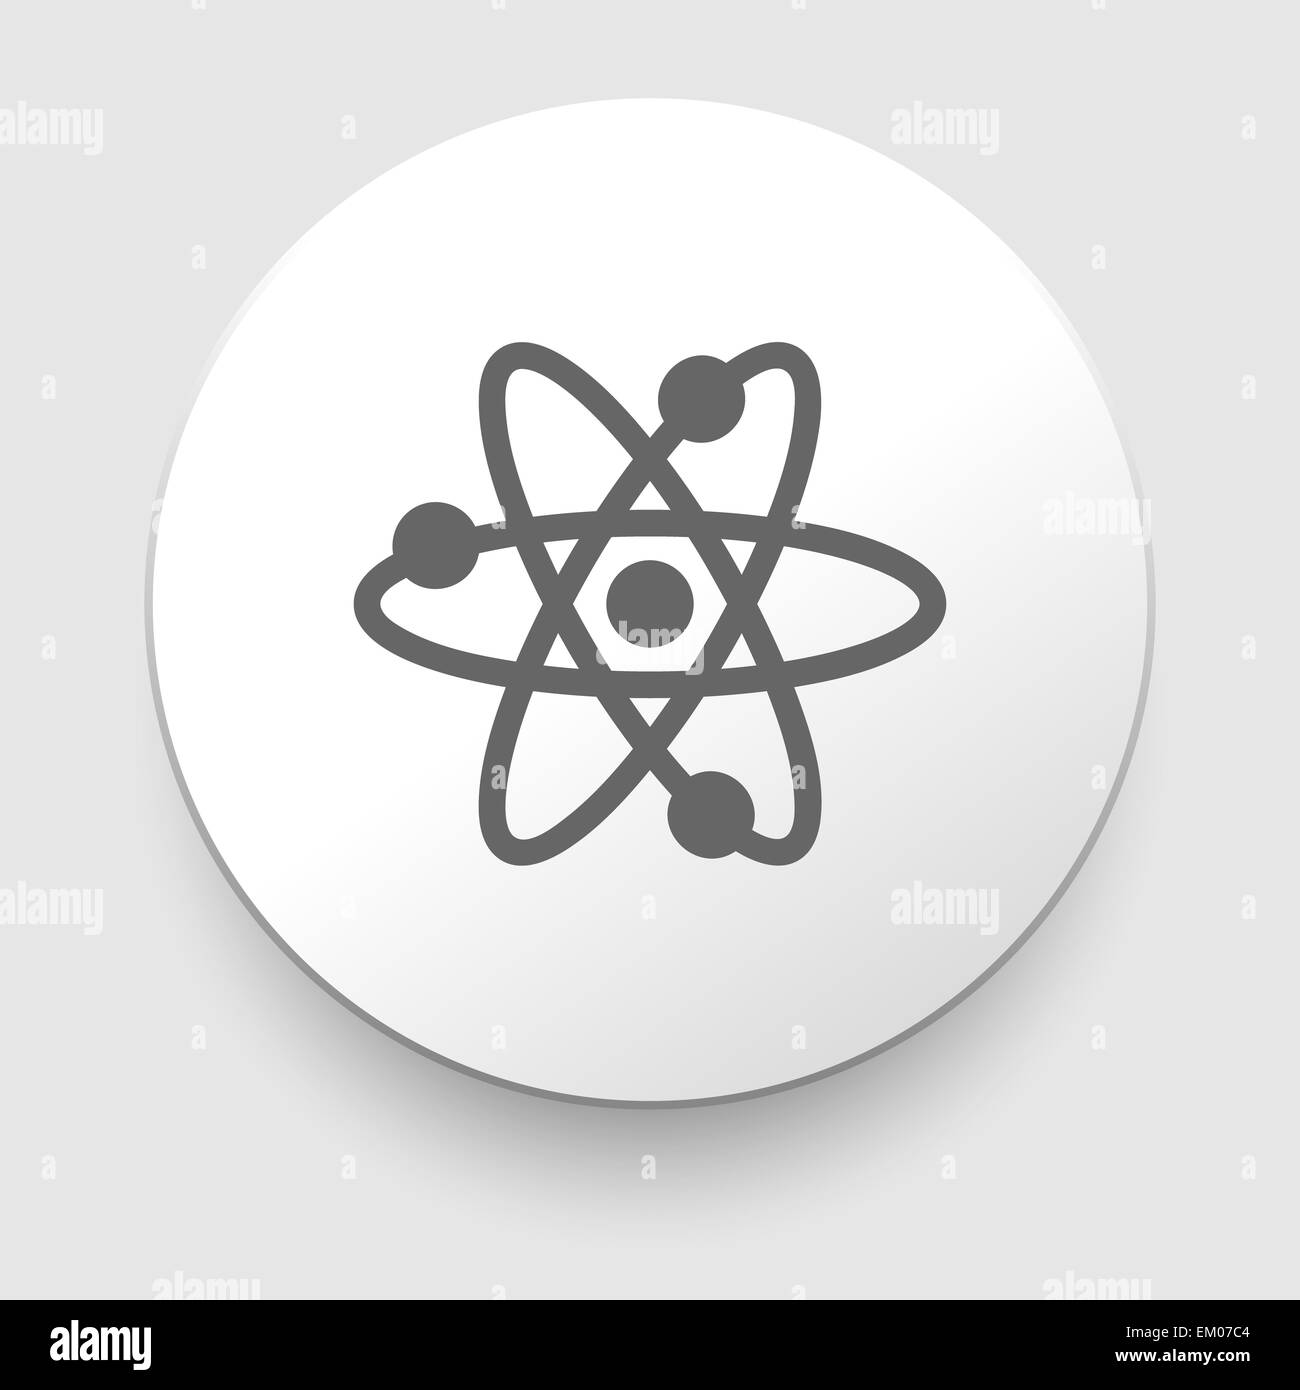 Atom abstrakte Physik Wissenschaft Modell symbol Stockfoto